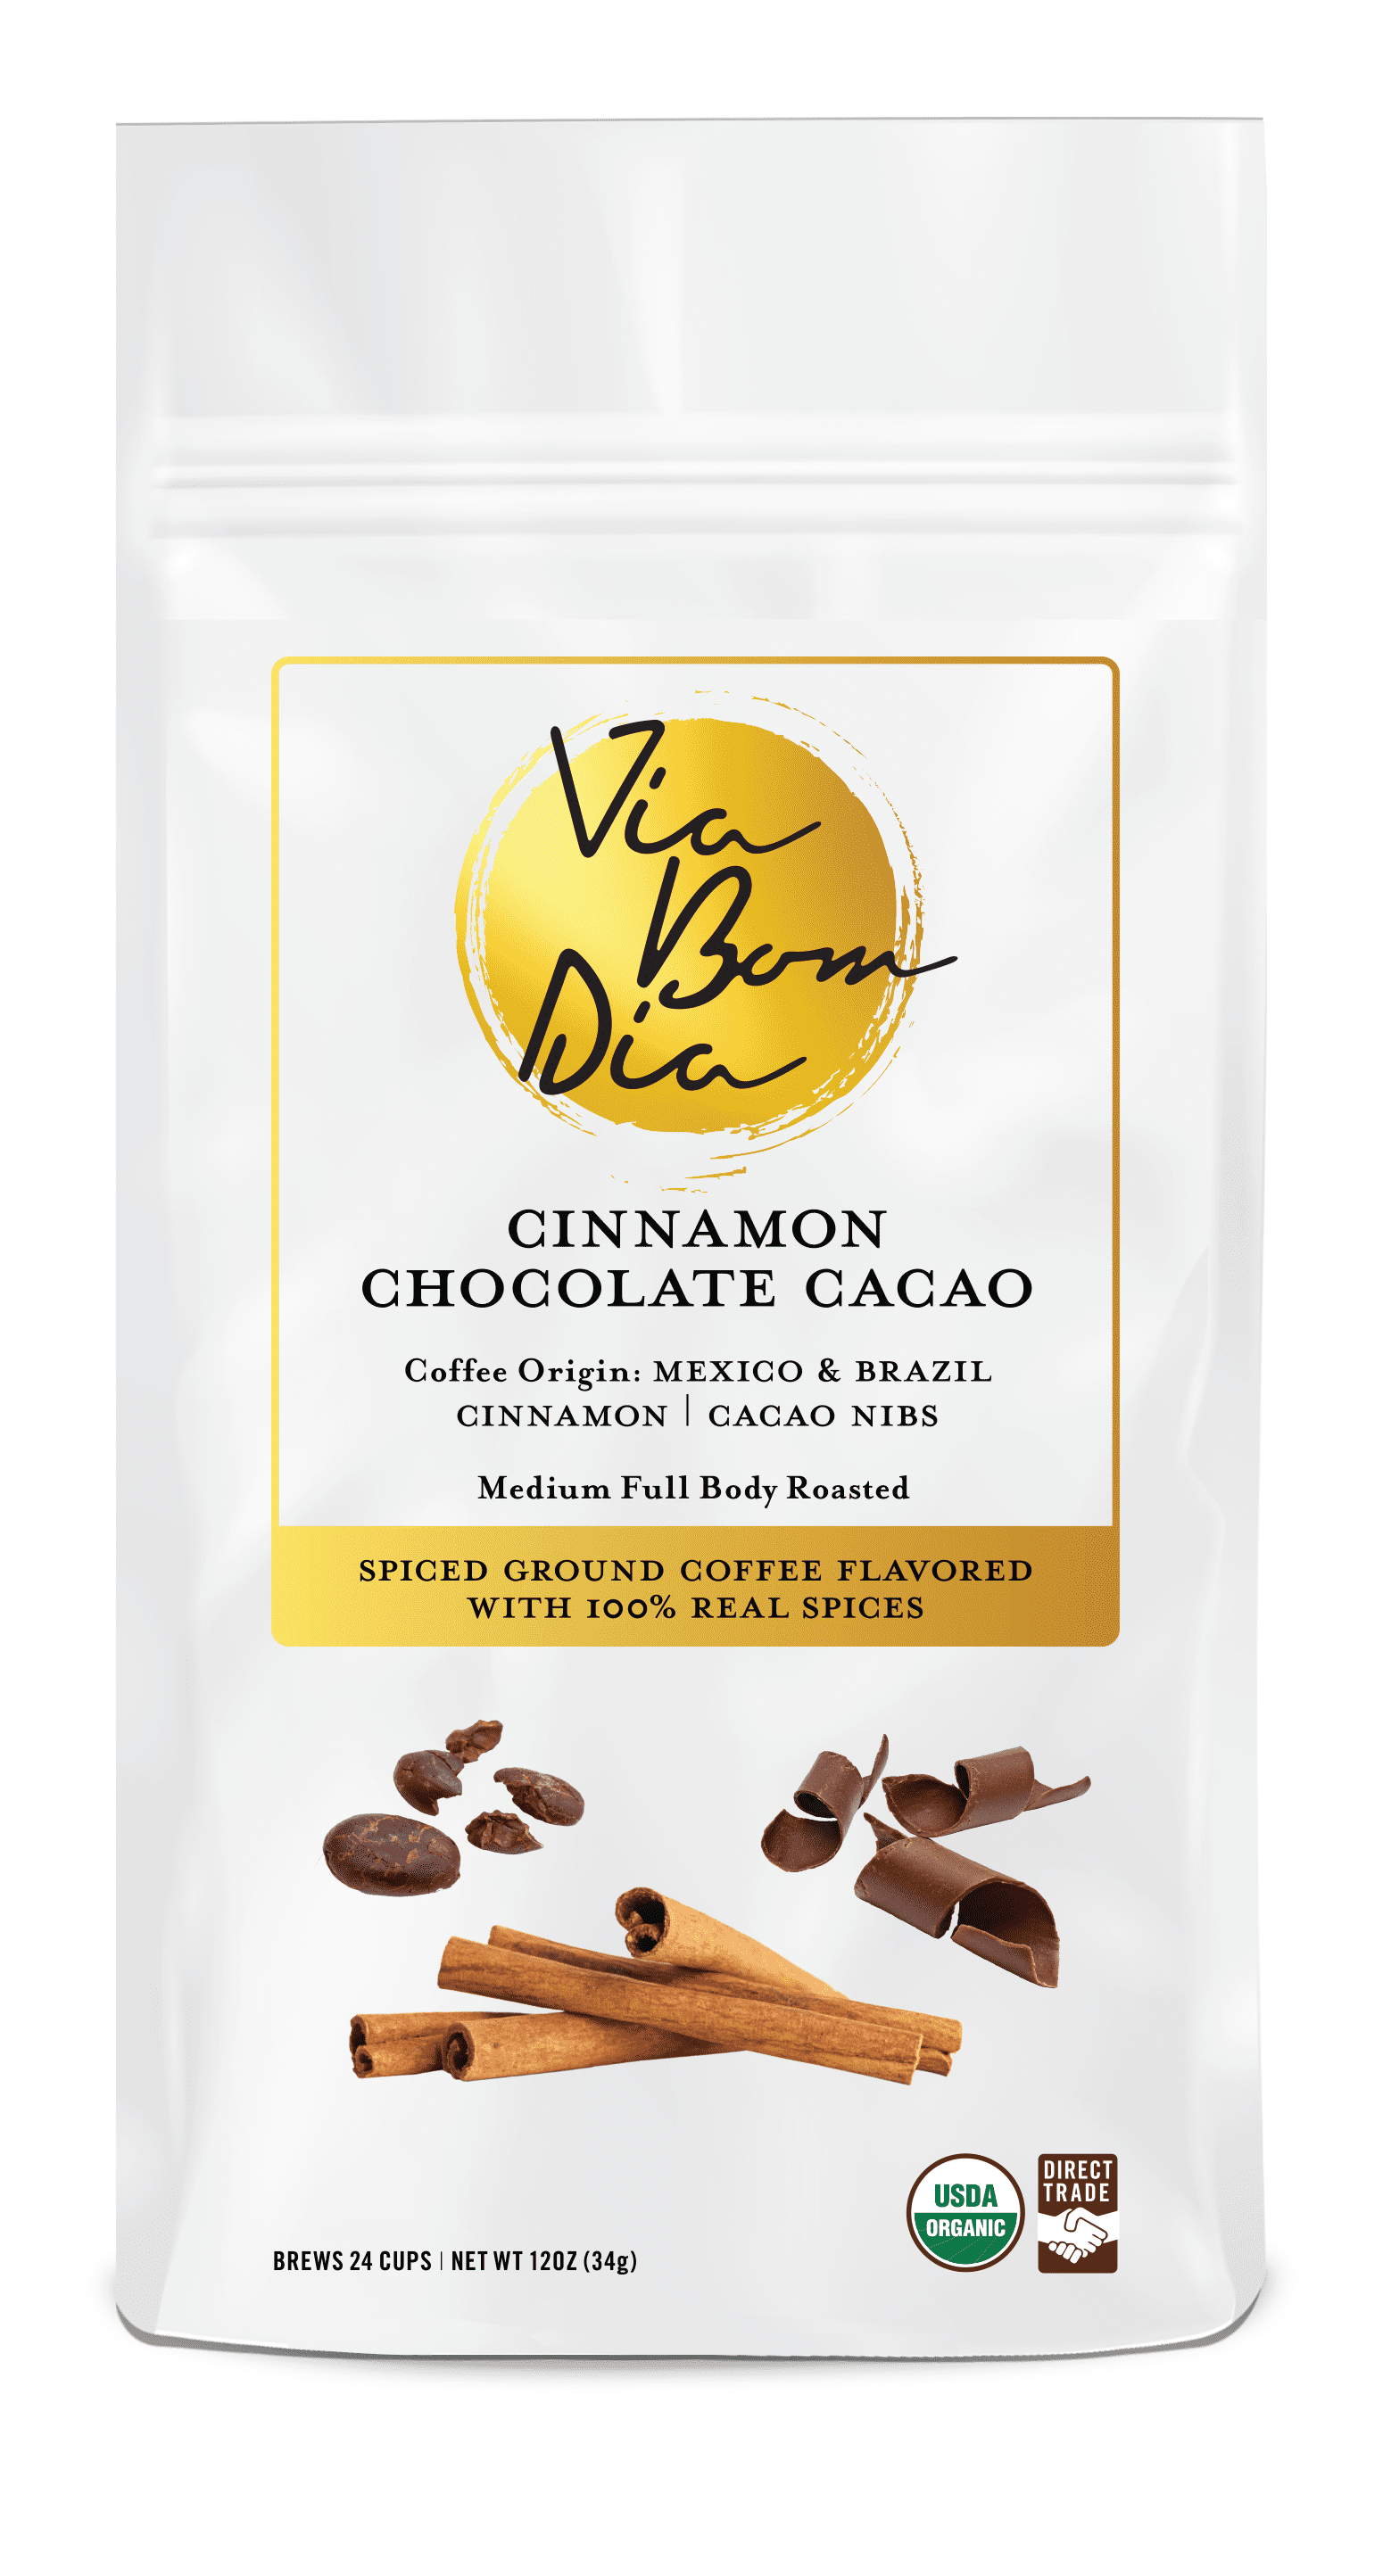 Via Bom Dia Naturally Flavored Ground Coffee Cinnamon Chocolate Cacao 12oz  